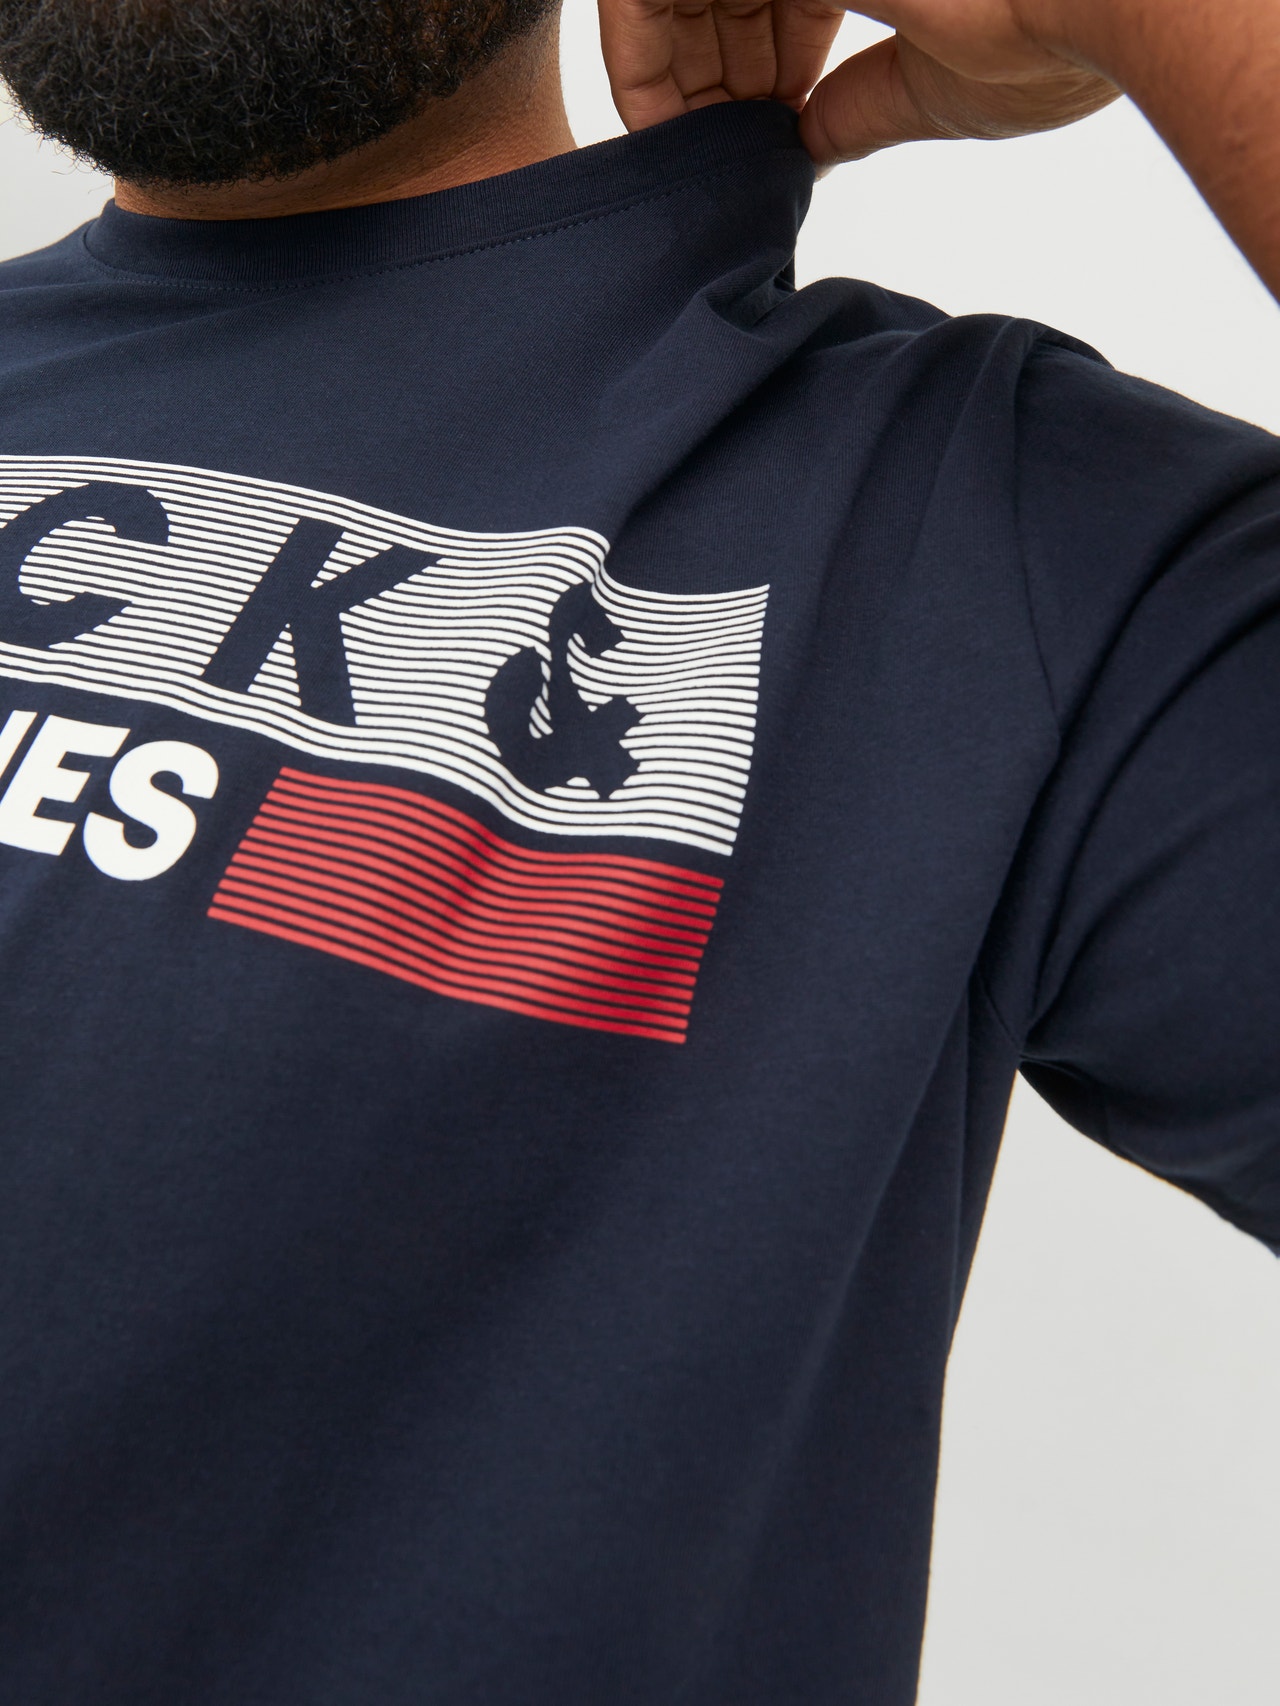 Jack & Jones Plus Size Camiseta Logotipo -Navy Blazer - 12158505